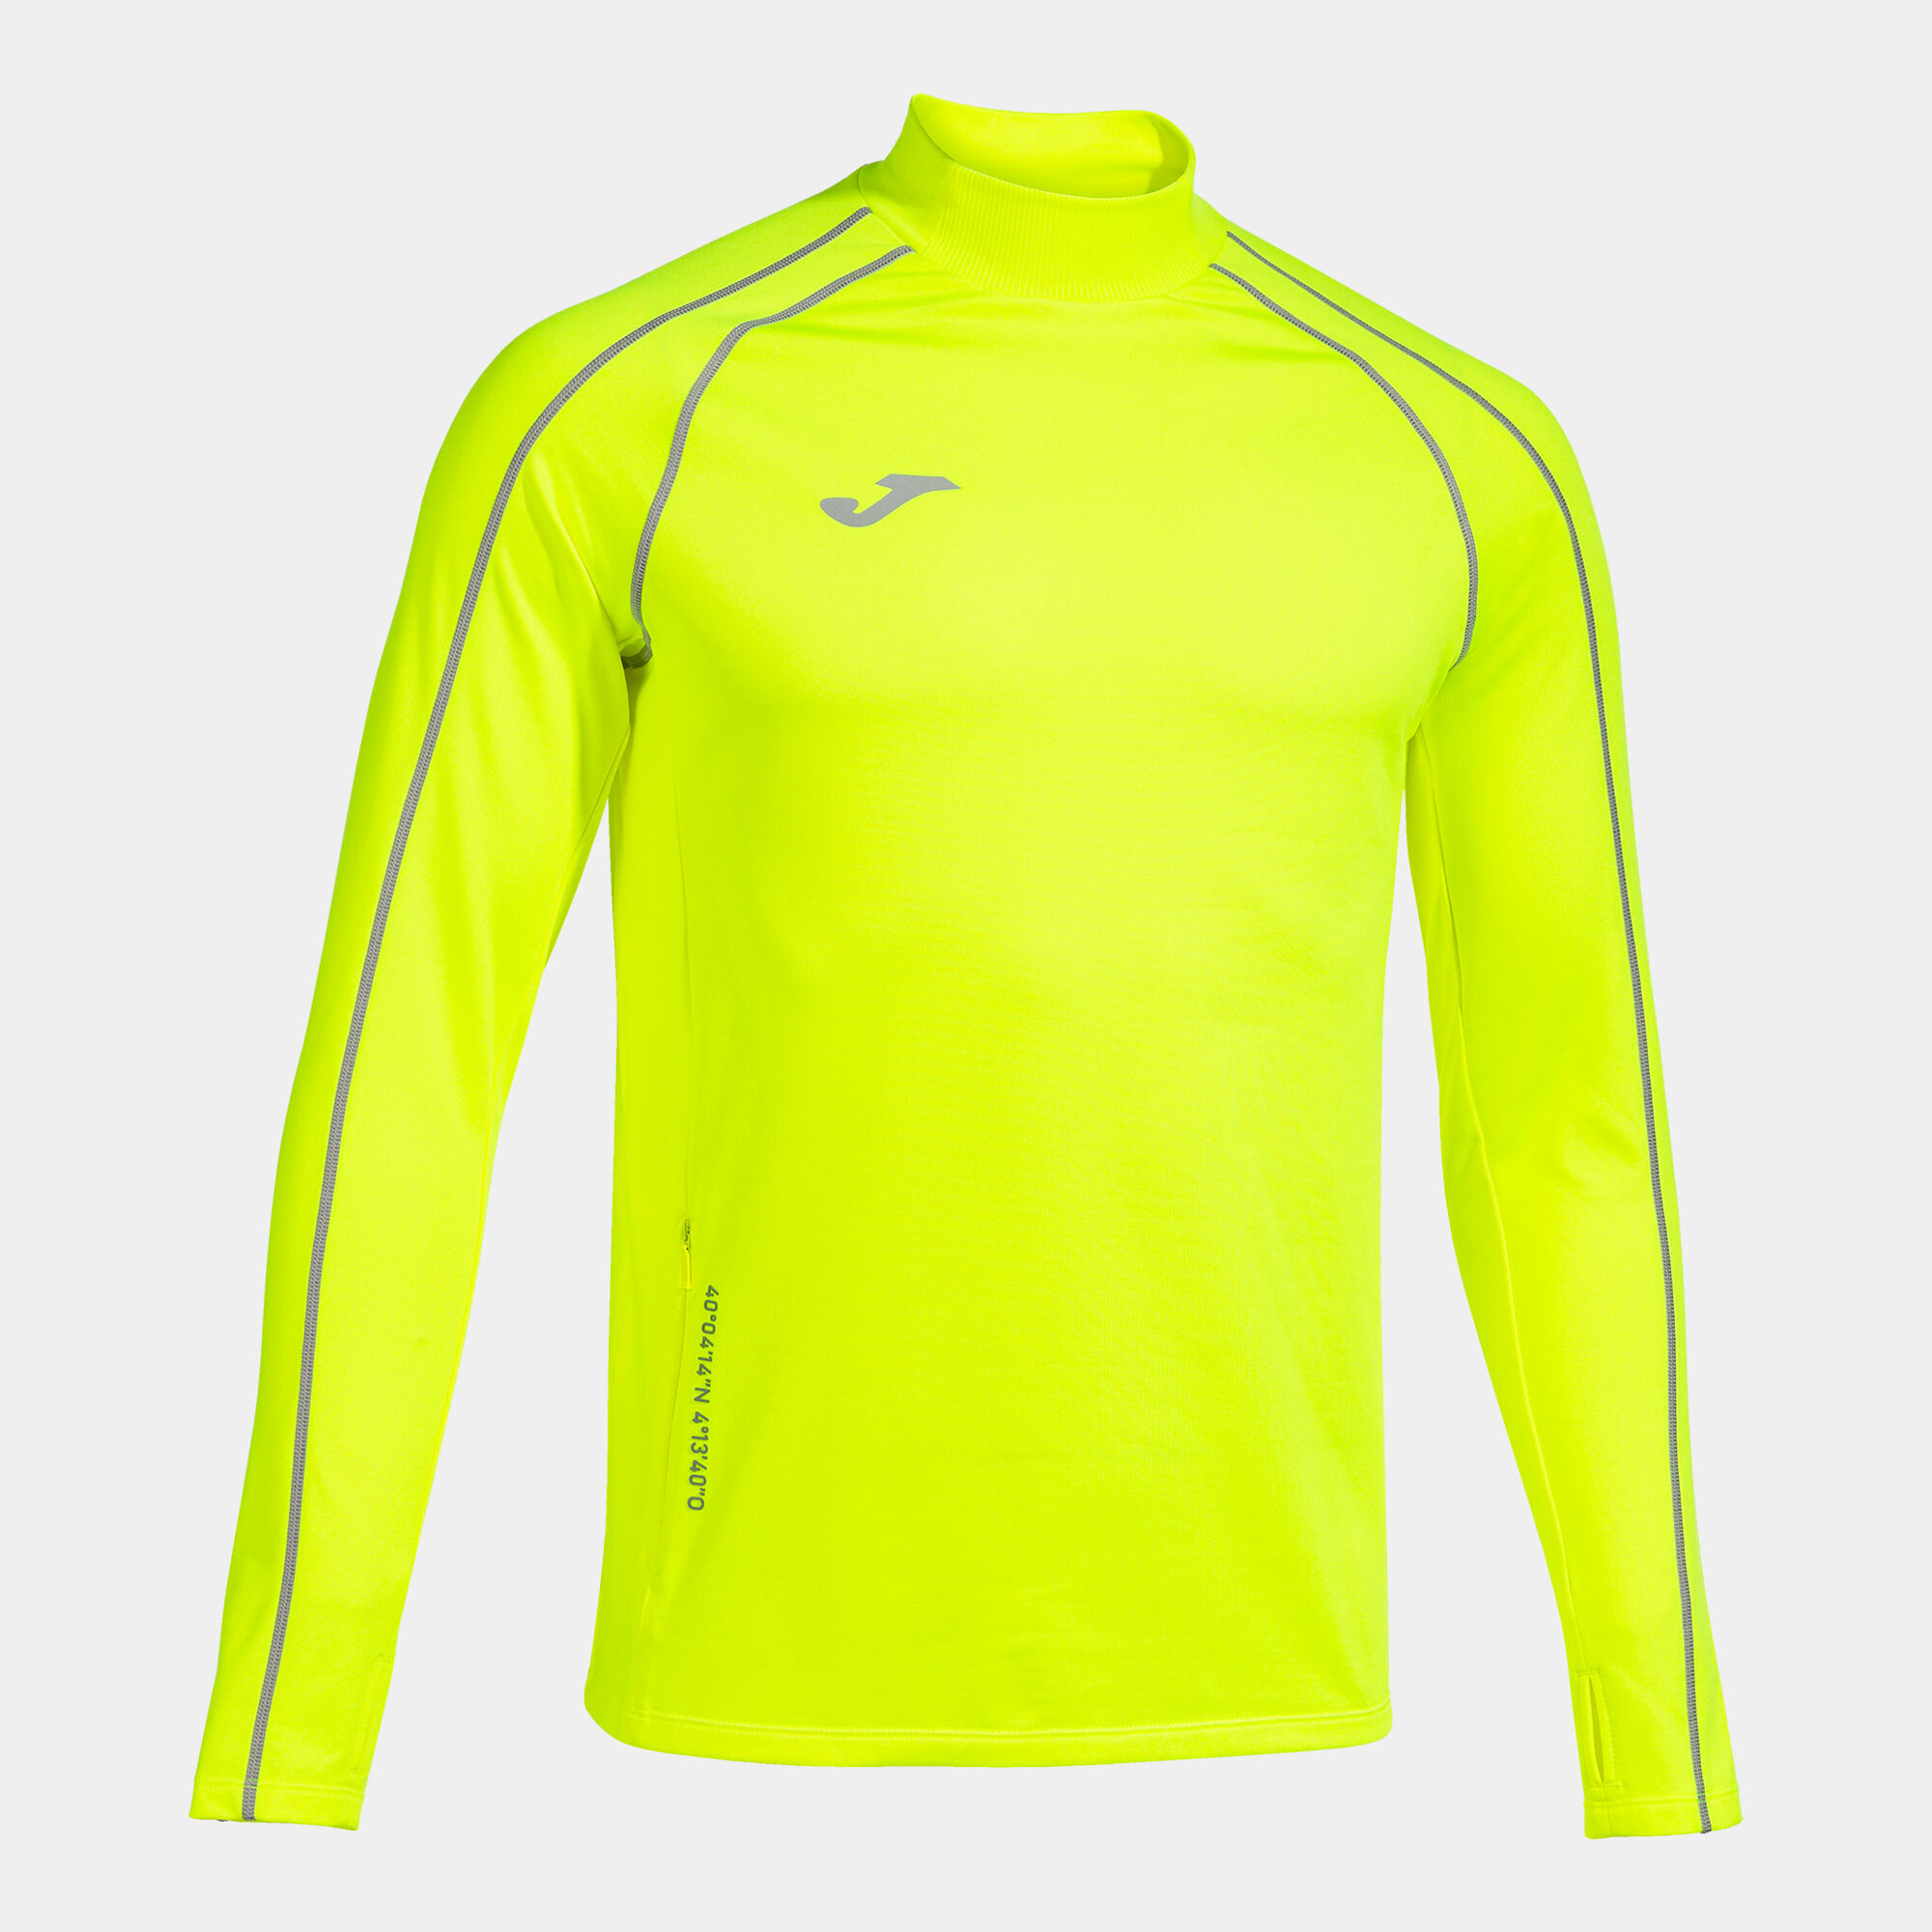 Sweat-shirt homme R-City jaune fluo